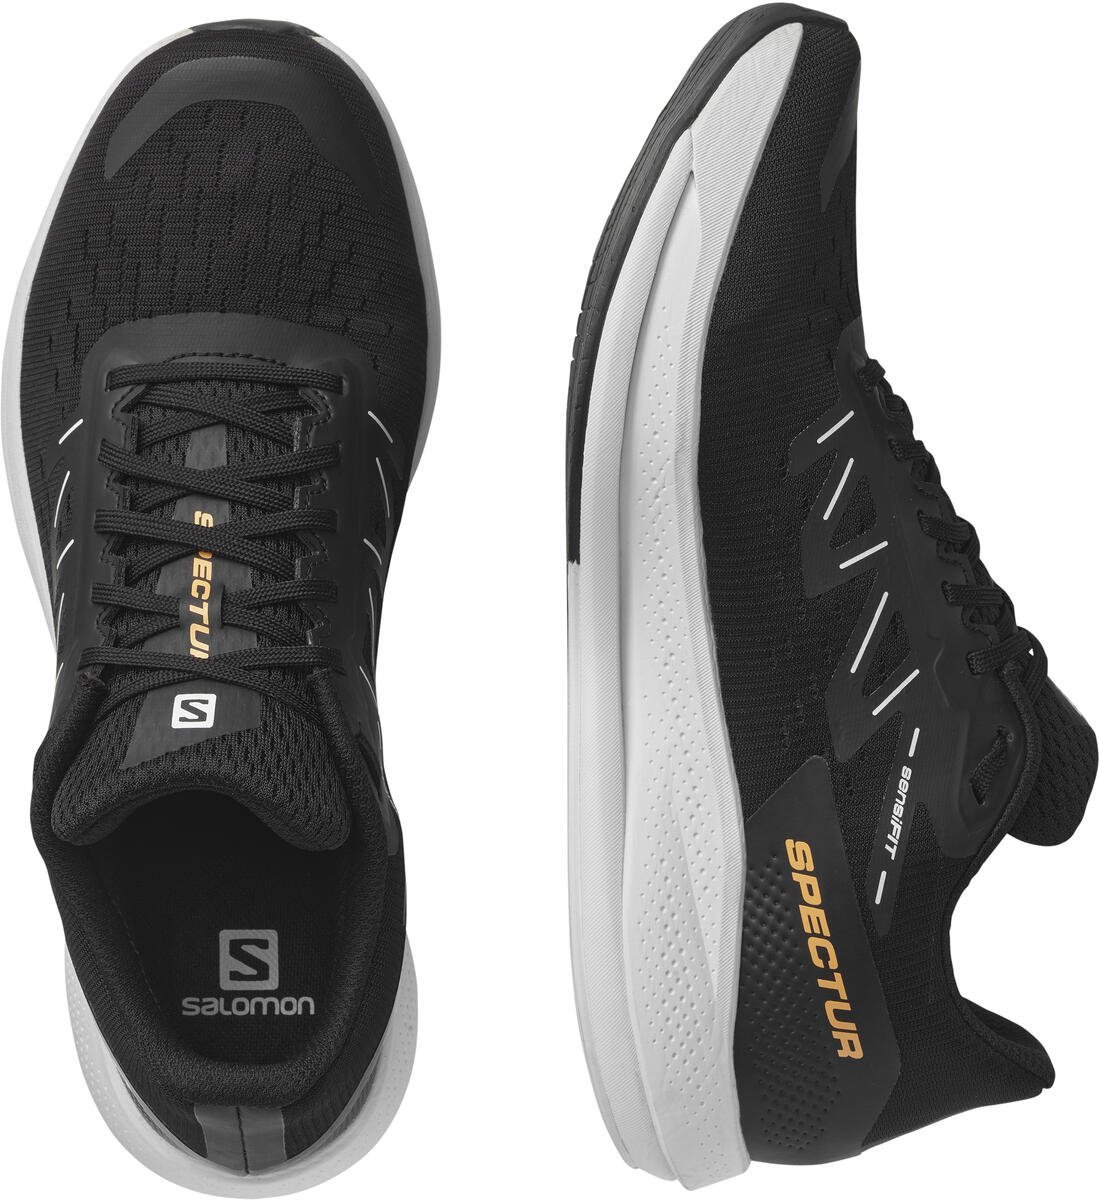 Topánky Salomon SPECTUR M - čierna